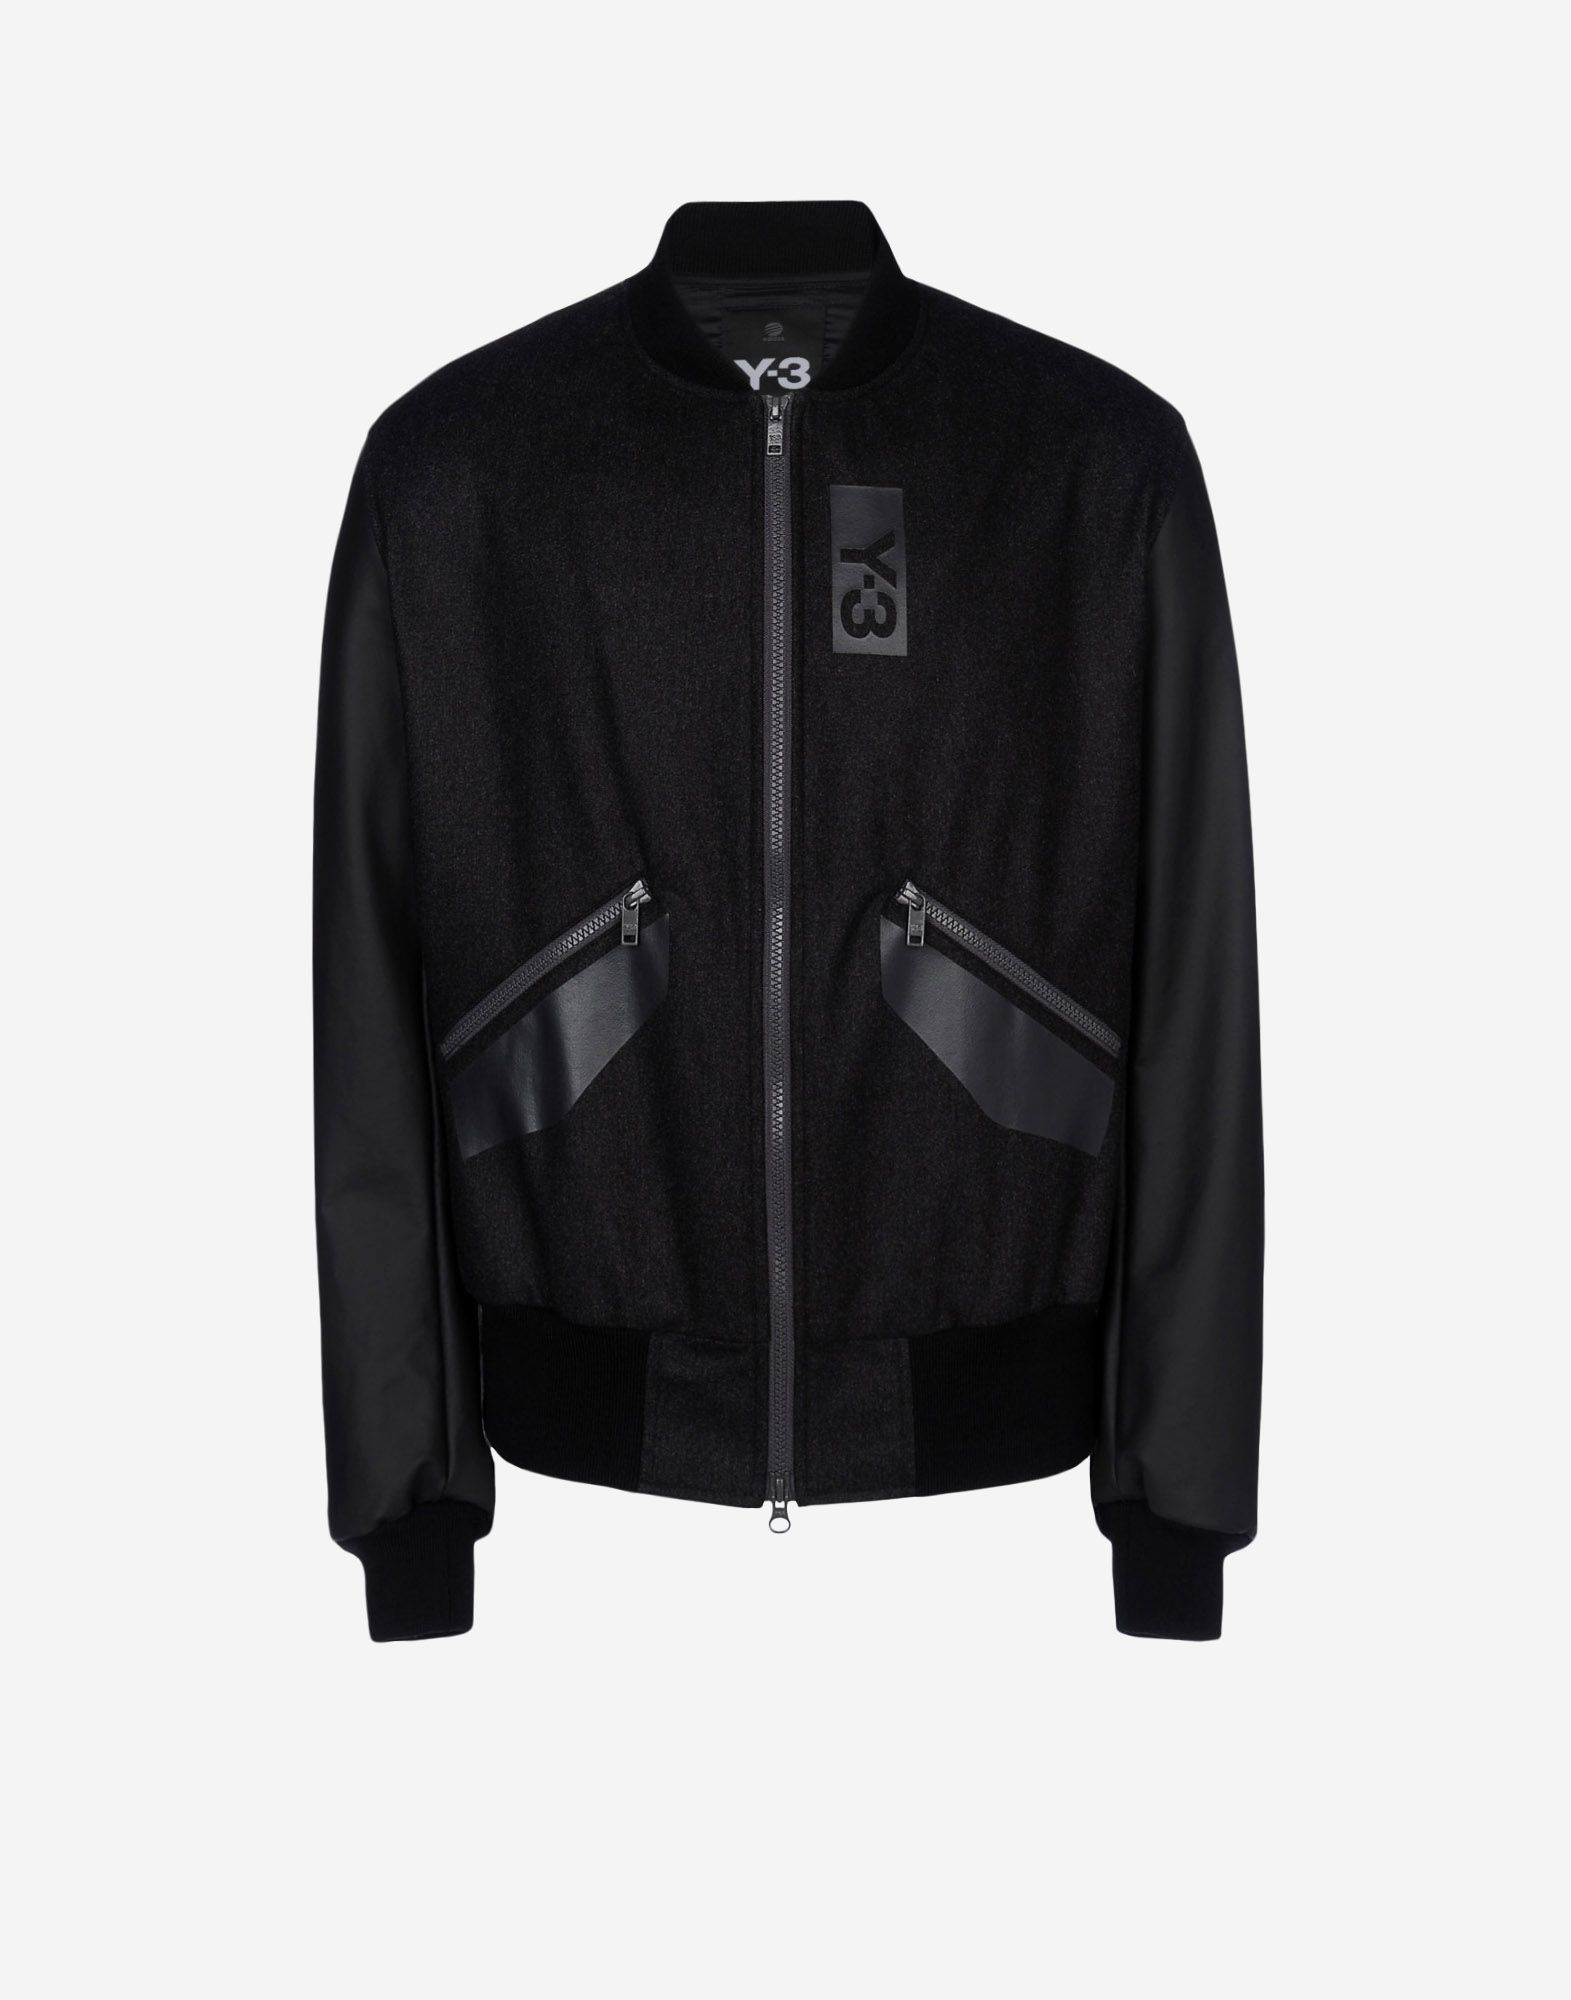 Y 3 Shadow Track Jacket for Men | Adidas Y-3 Official Store